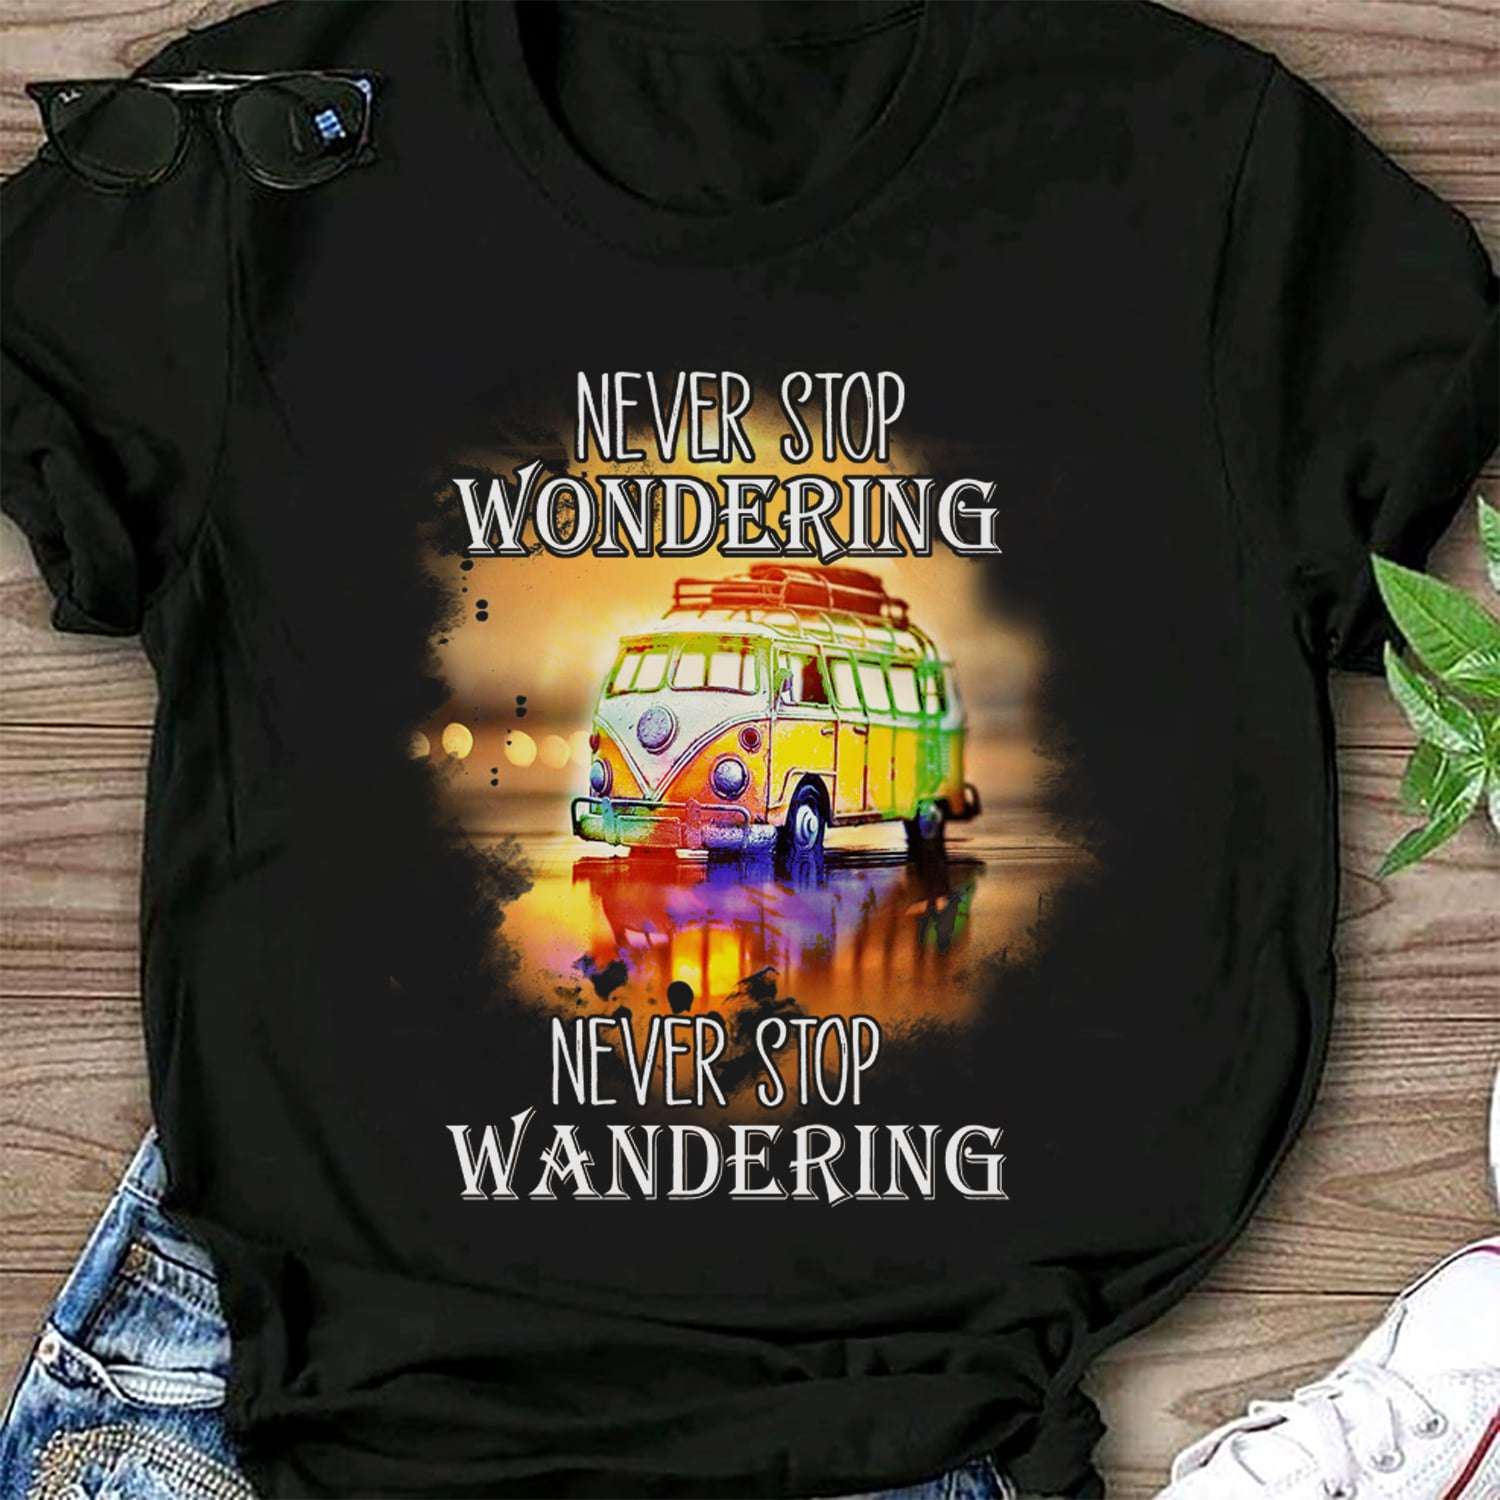 Never stop wondering, never stop wandering - Hippie lifestyle bus